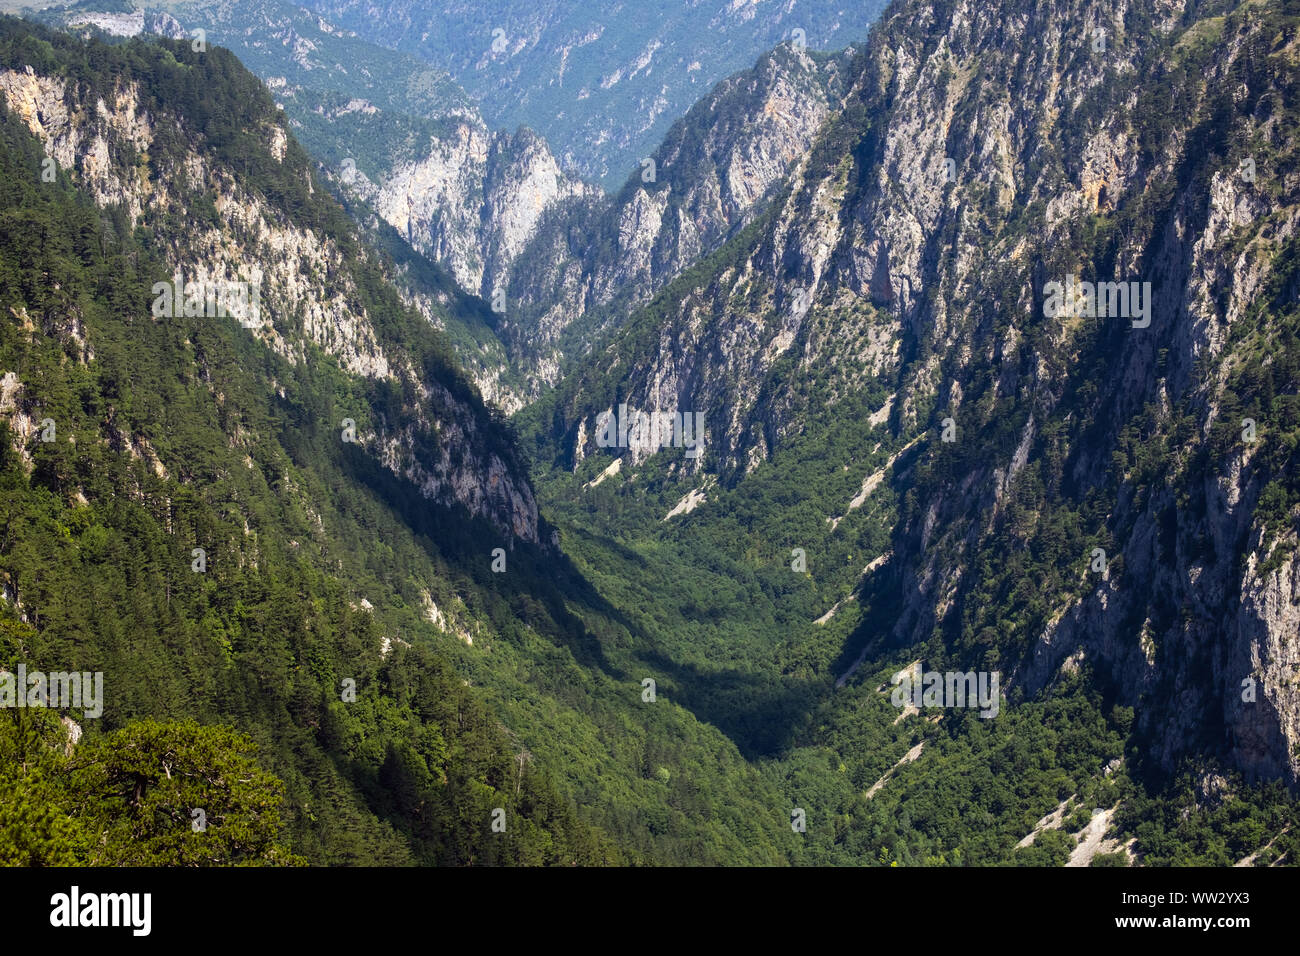 Picturesque summer mountain landscape of Tara Canyon in mountain Durmitor National Park, Montenegro, Europe, Balkans Dinaric Alps, UNESCO World Herita Stock Photo